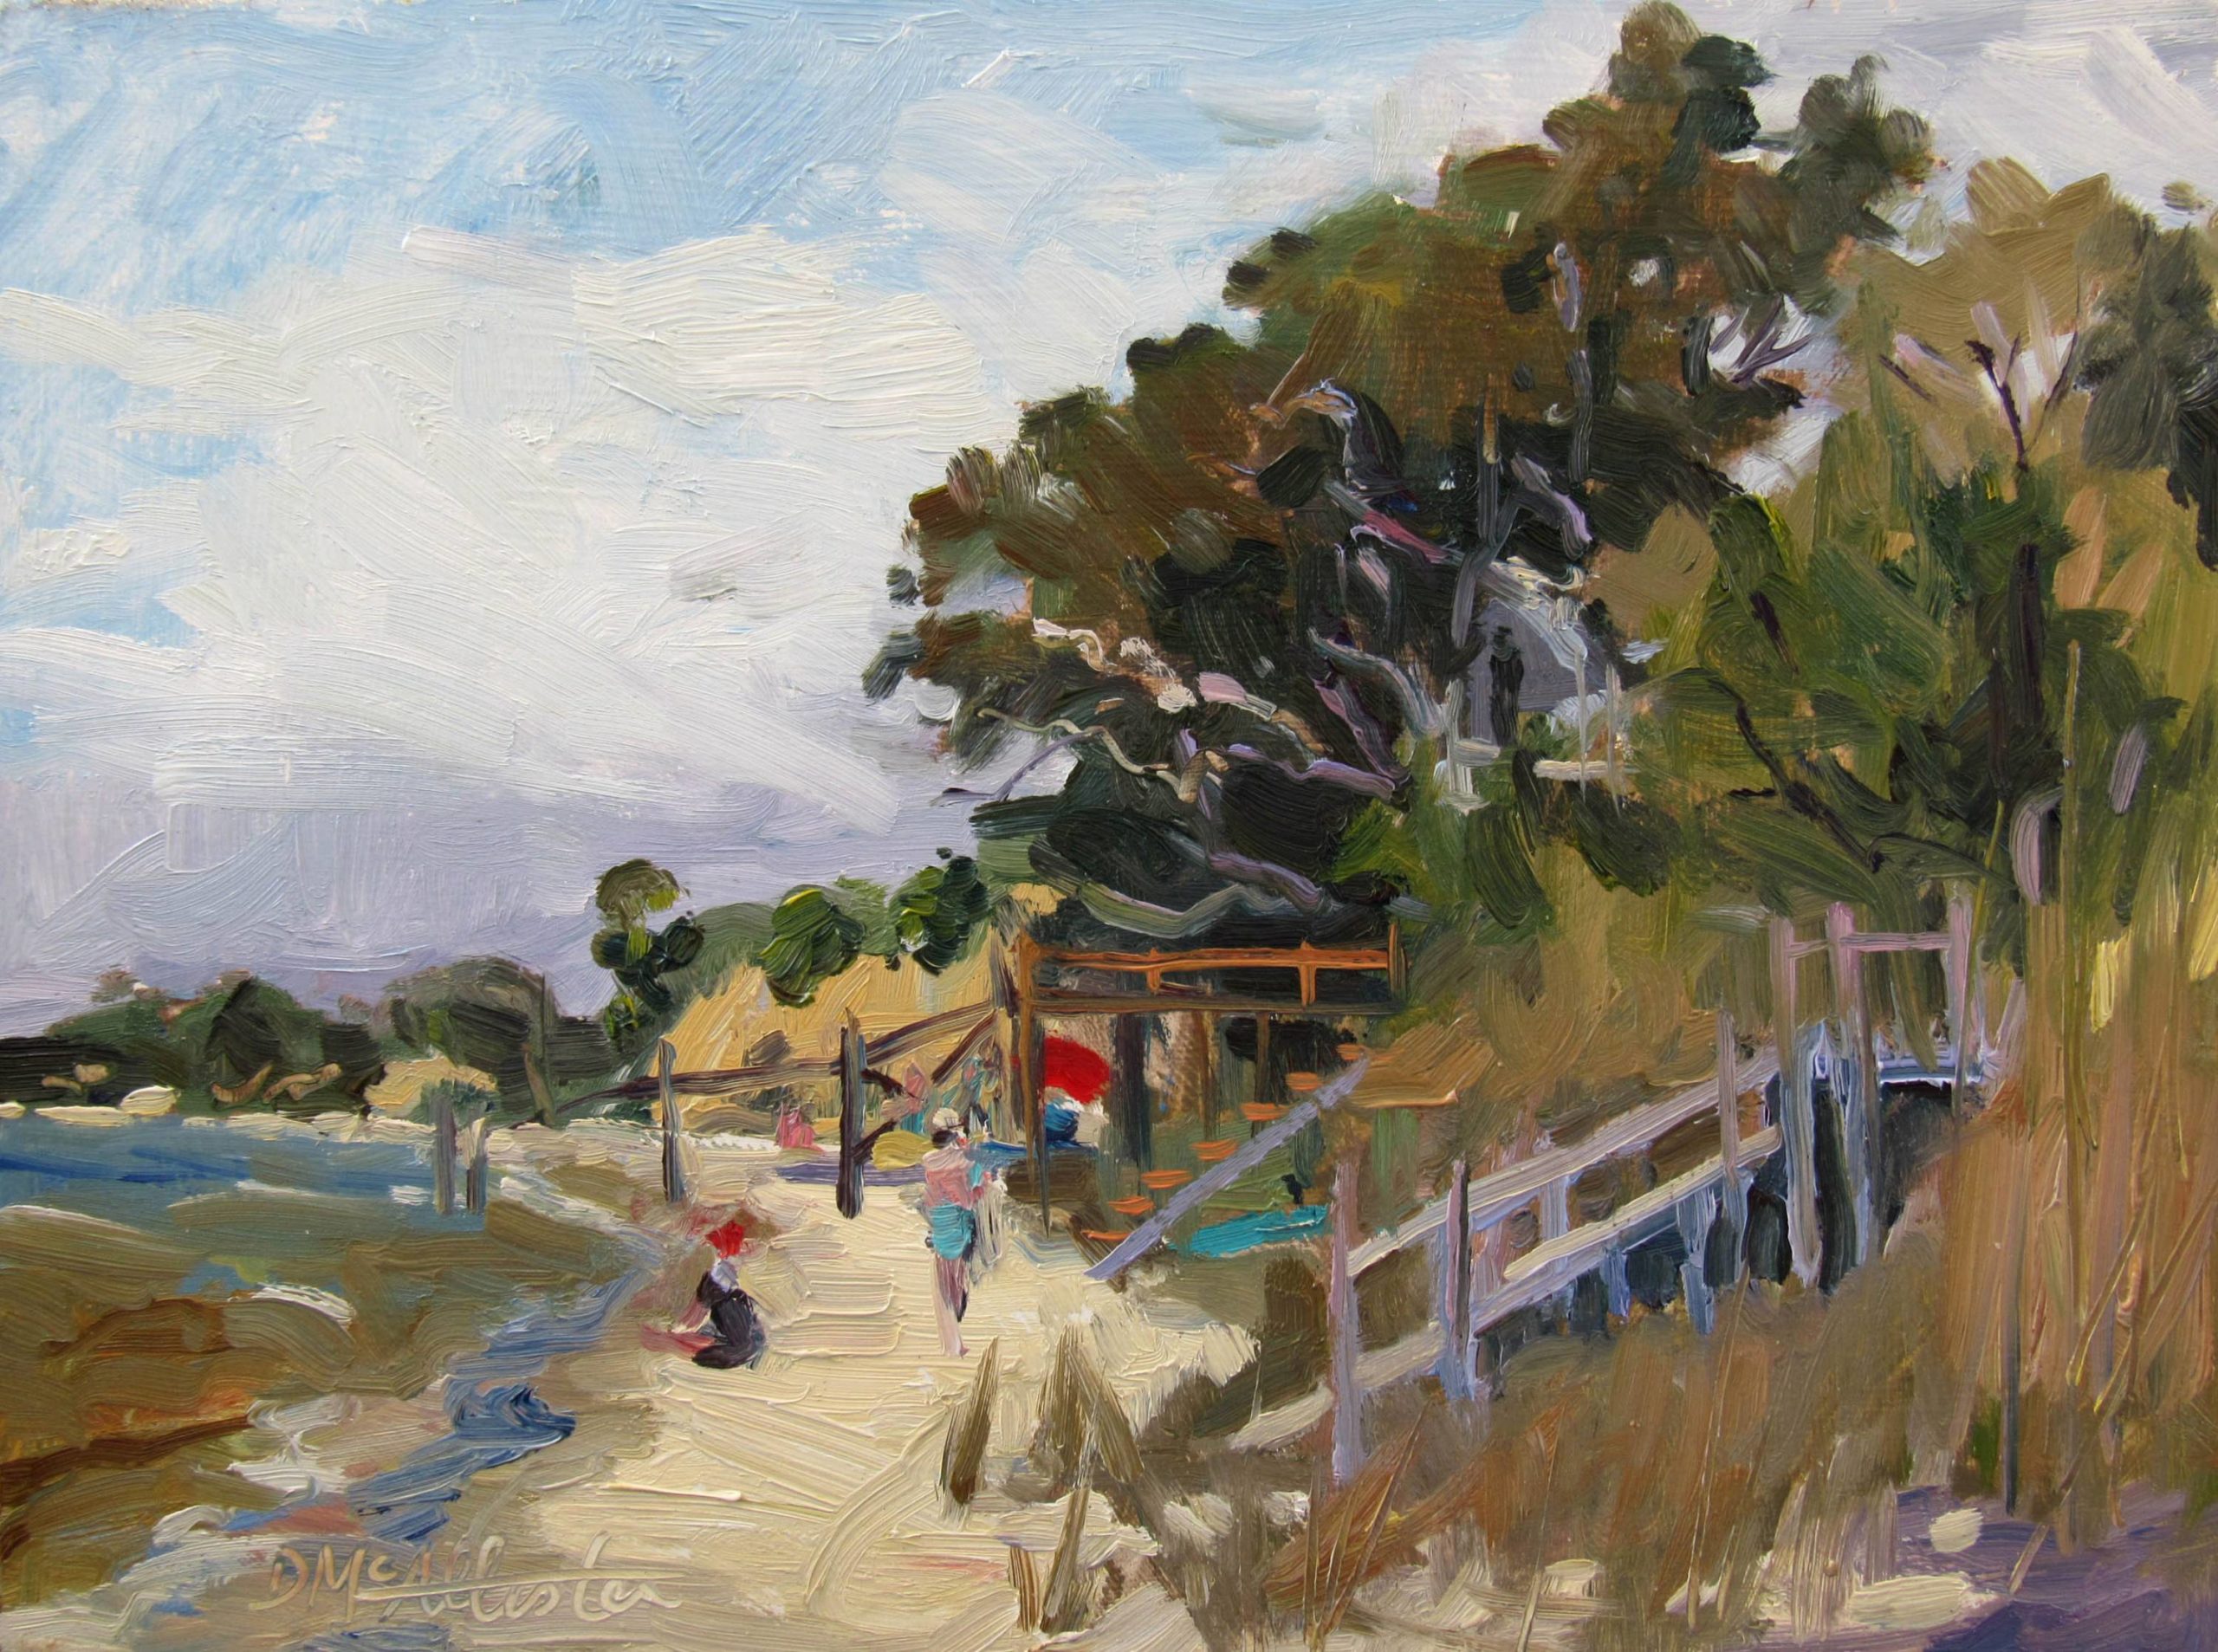 Deborah McAllister, "Hideaway Beach," 2020, oil, 9 x 12 in., Available from artist, Plein air